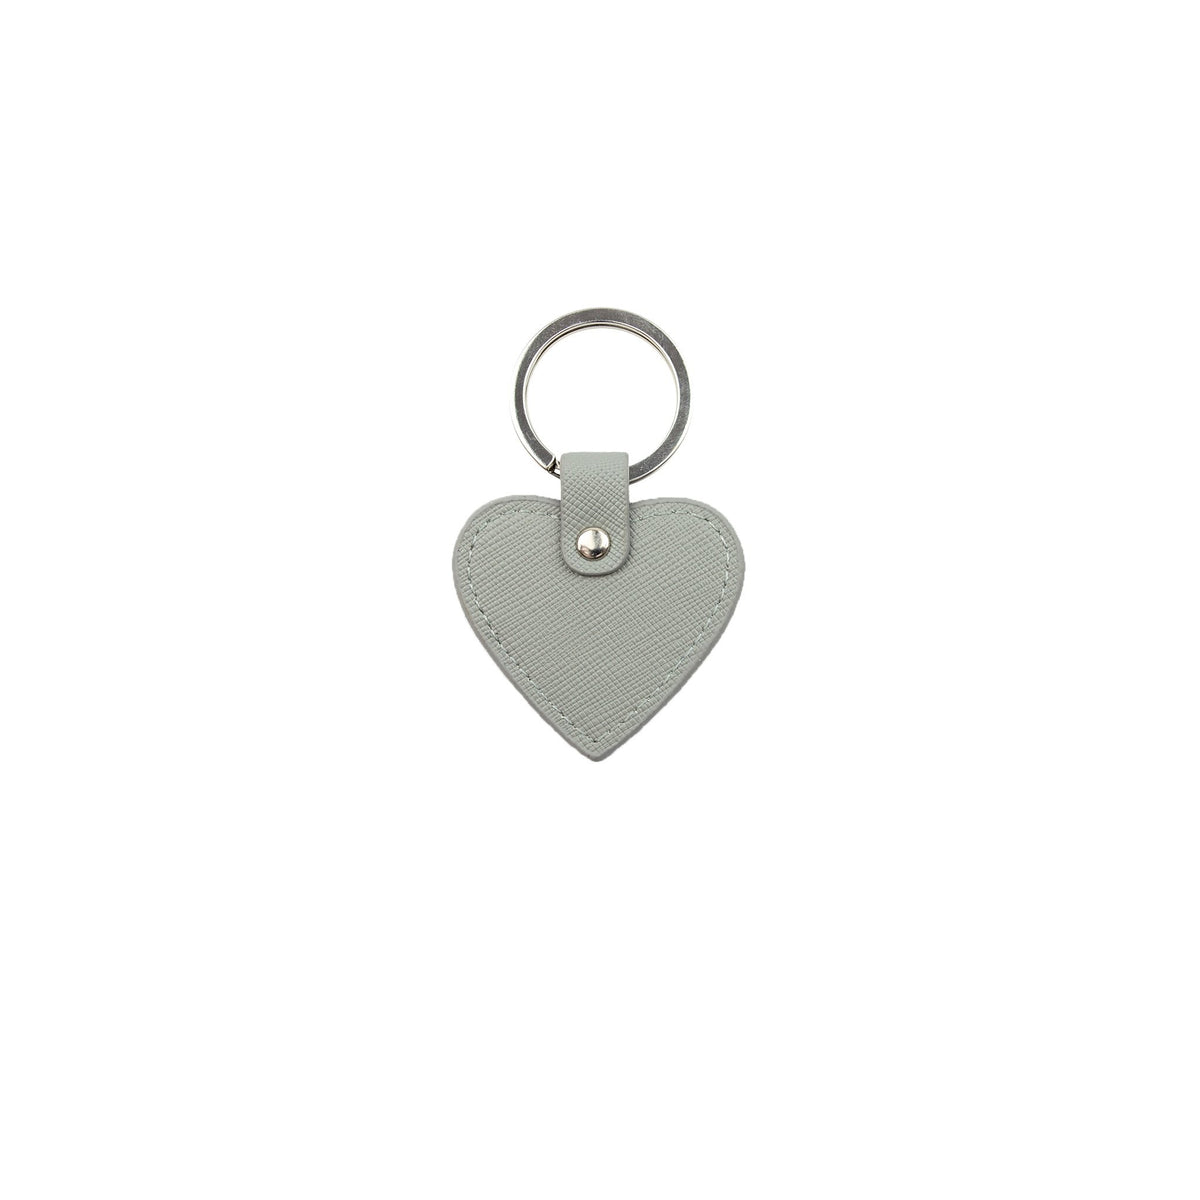 Personalised Mini Heart Keyring - Grey Saffiano Leather